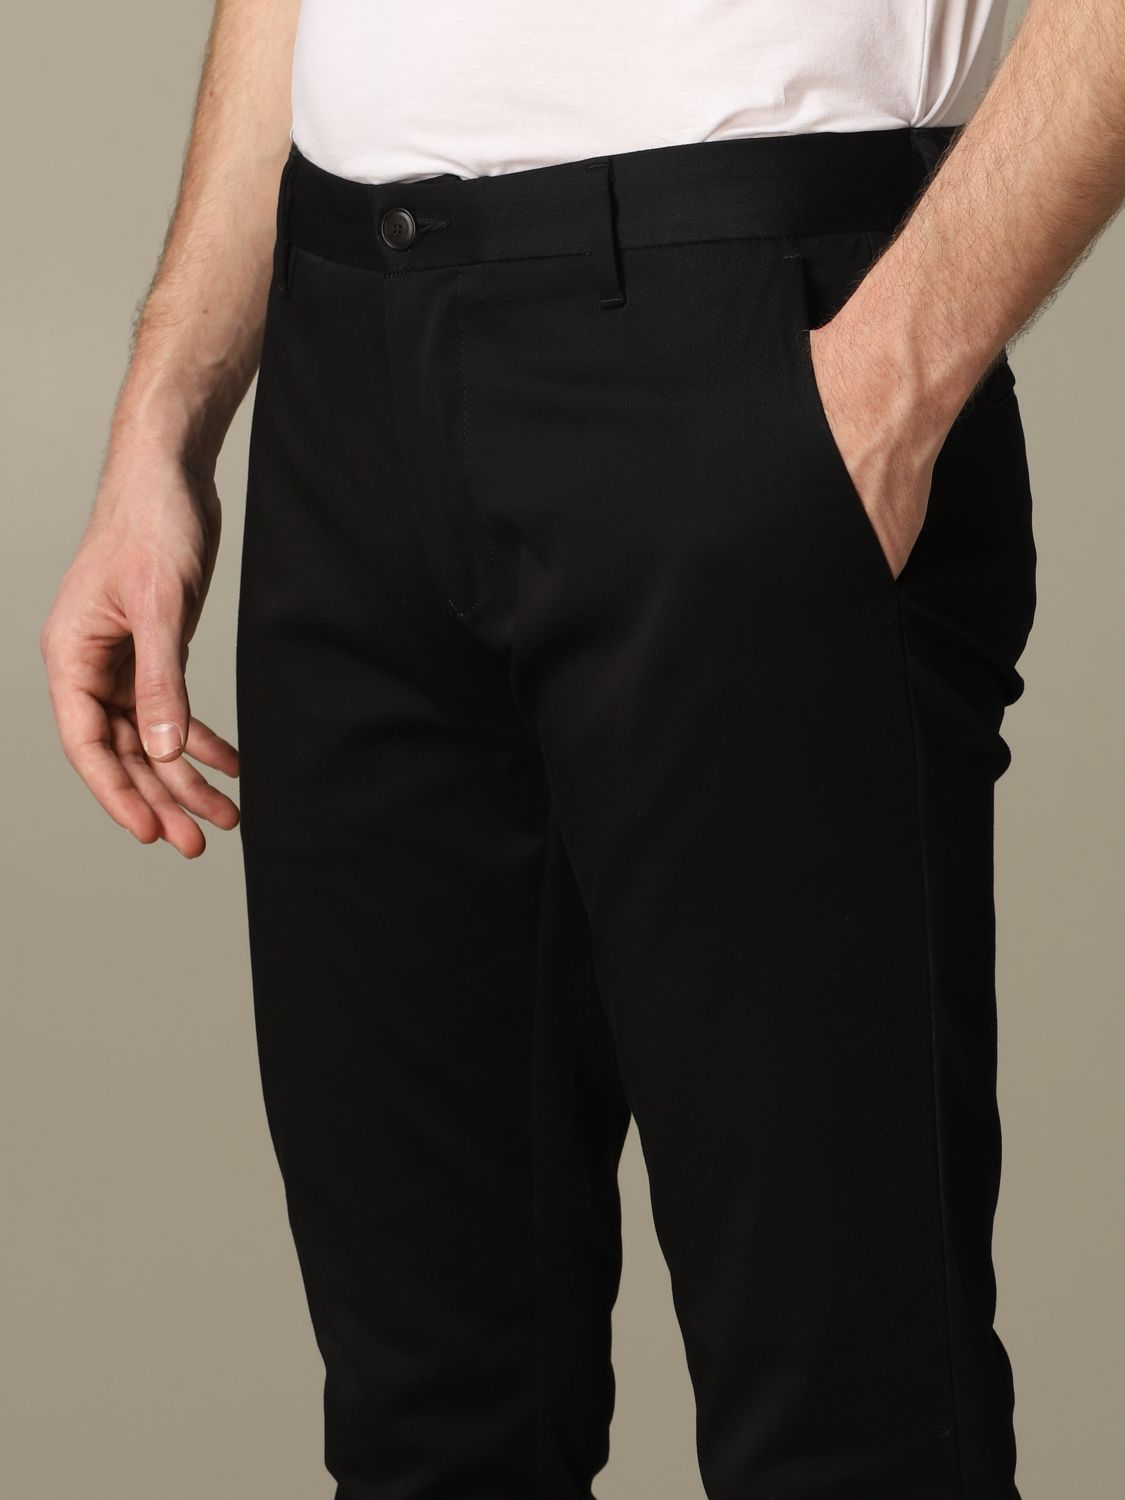 armani black pants